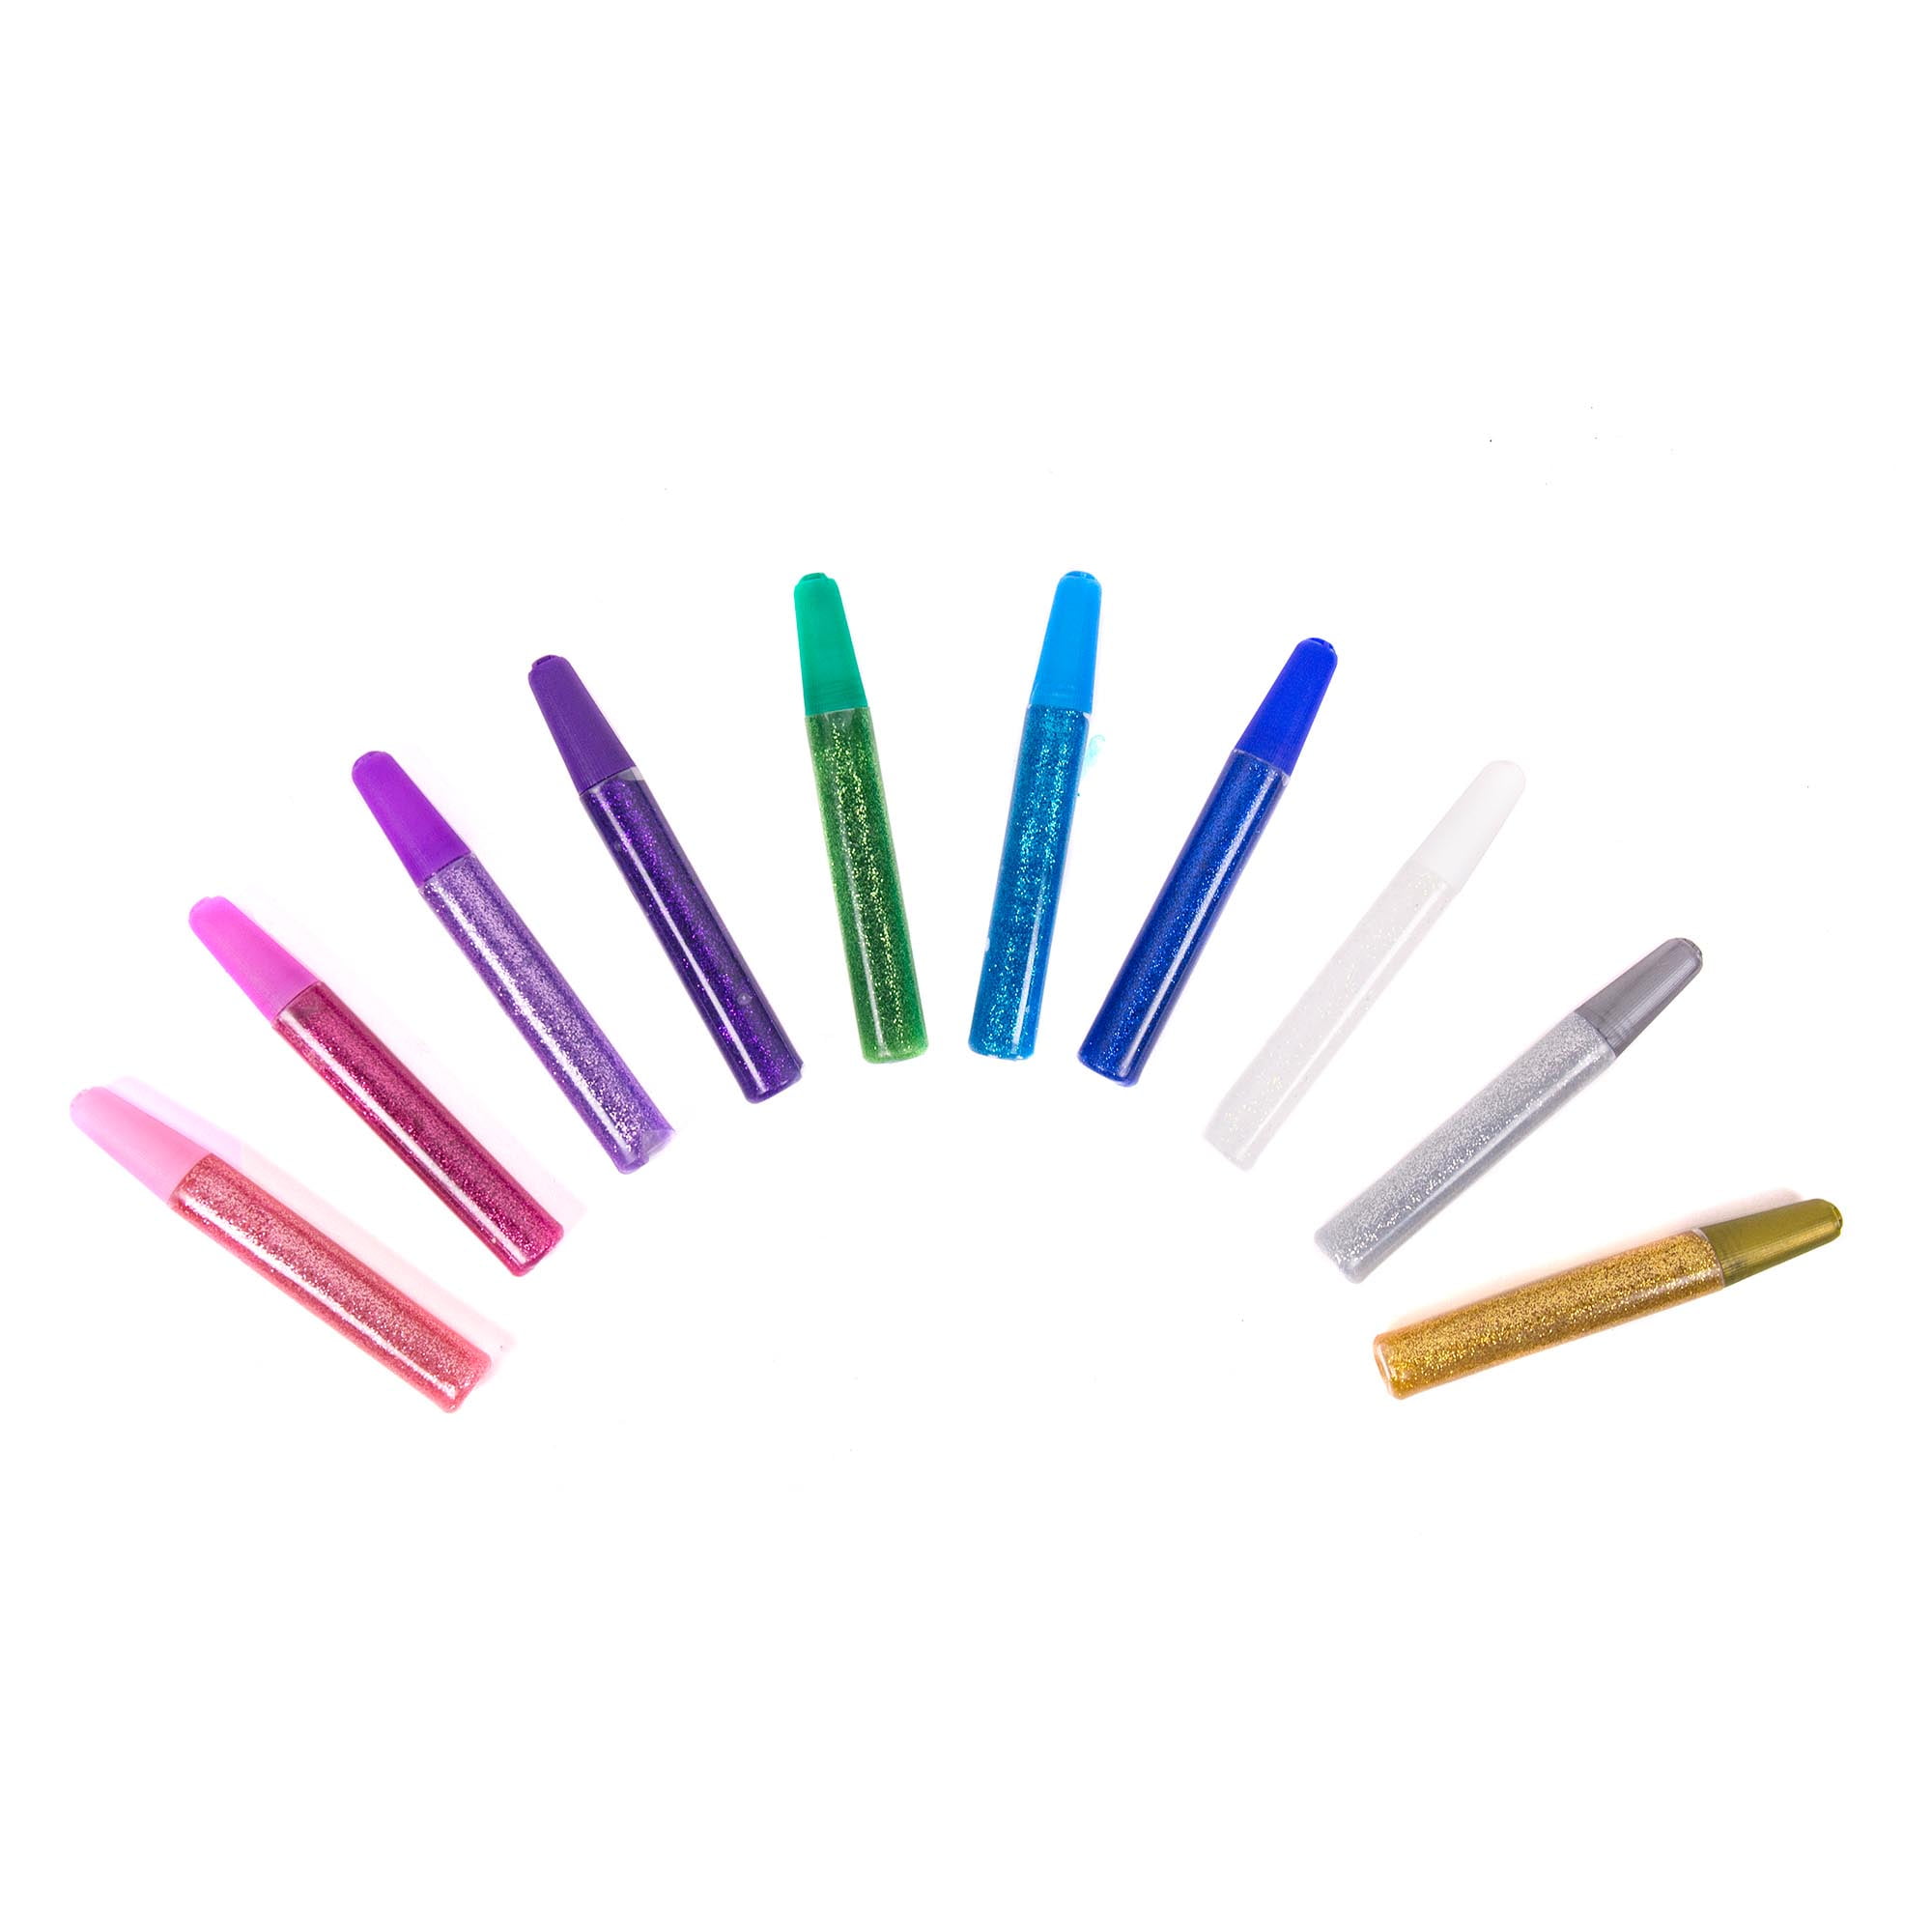 Assorted Colors Bright Tone Premium Glitter Glue Pens - 24 Pc